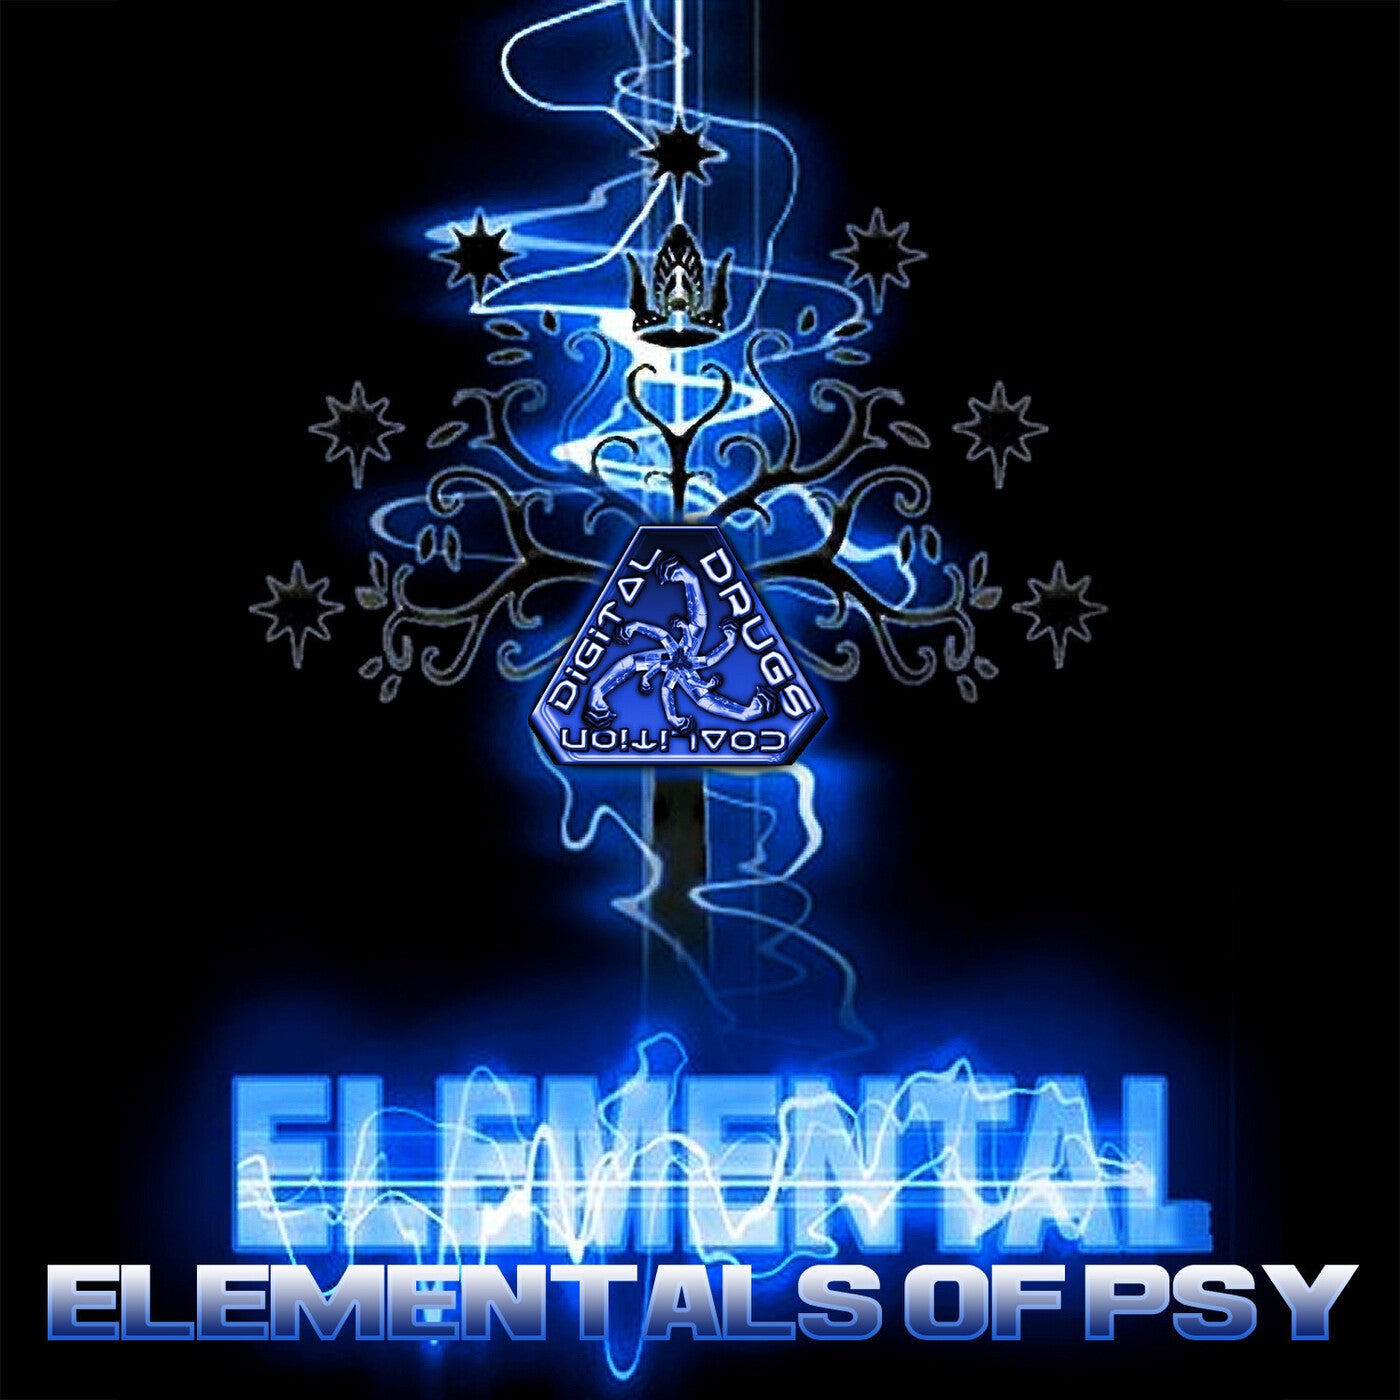 Elementals of Psy